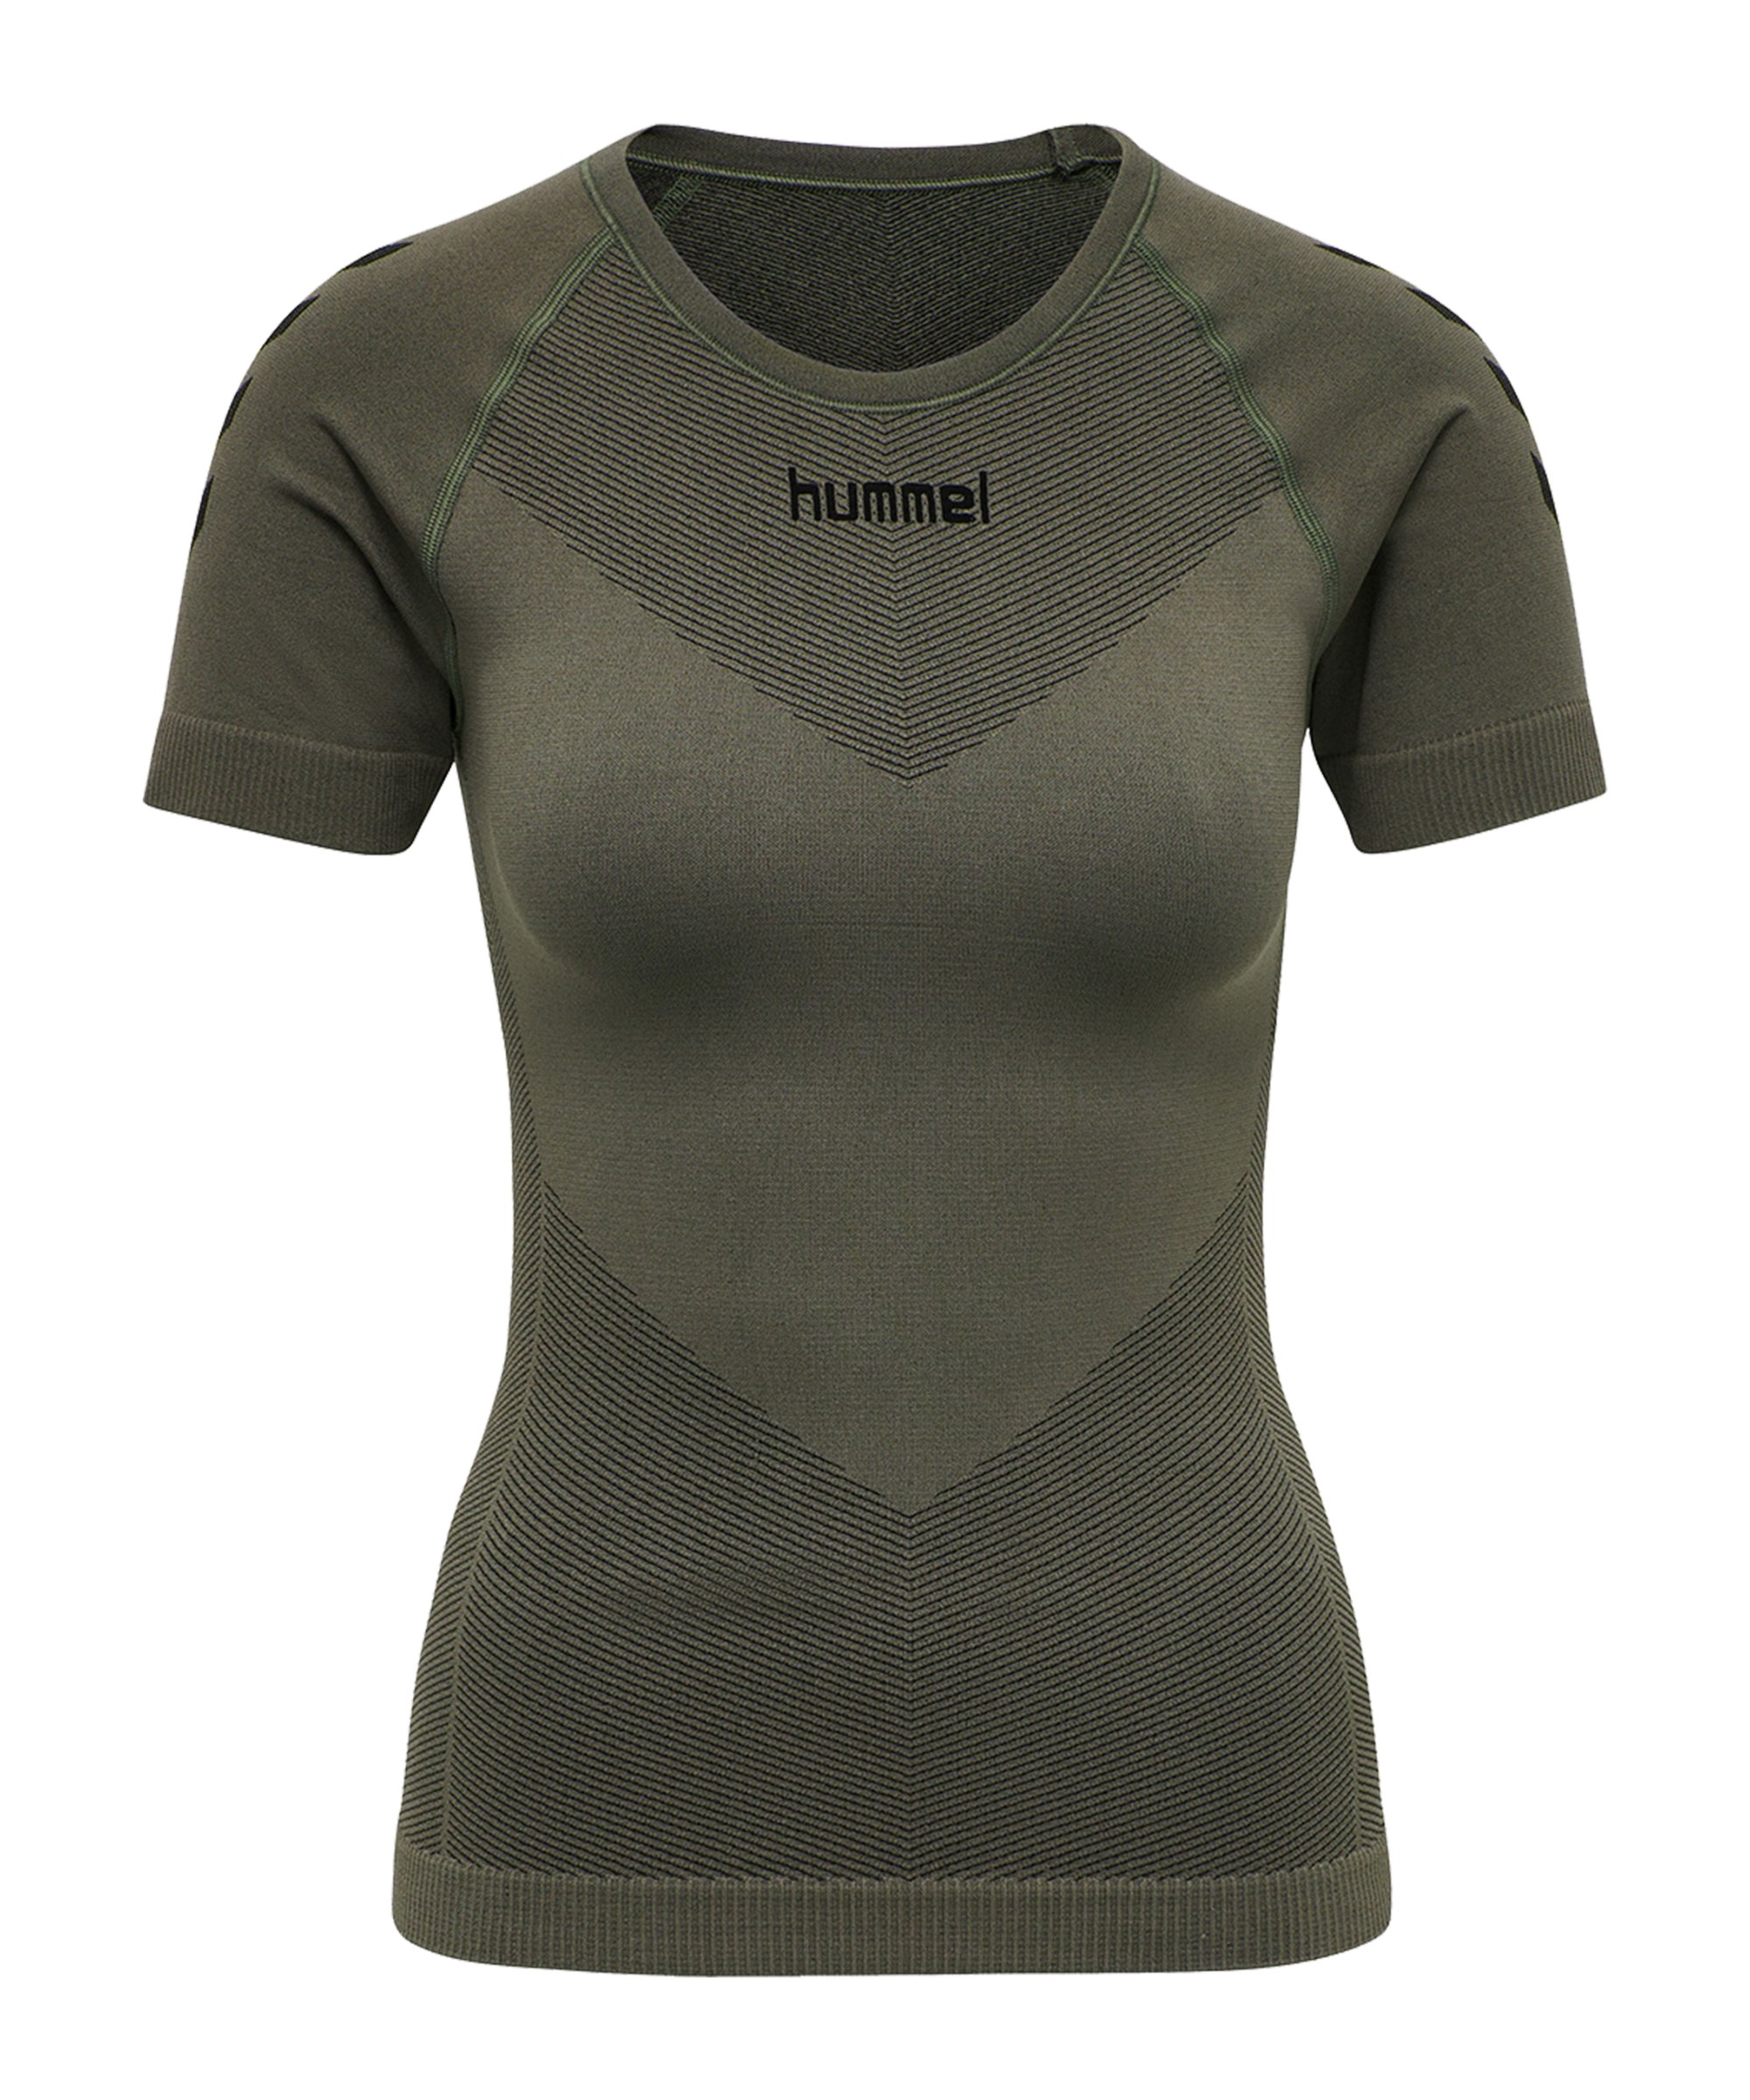 Hummel First Seamless T-Shirt Damen Khaki F6084 - khaki